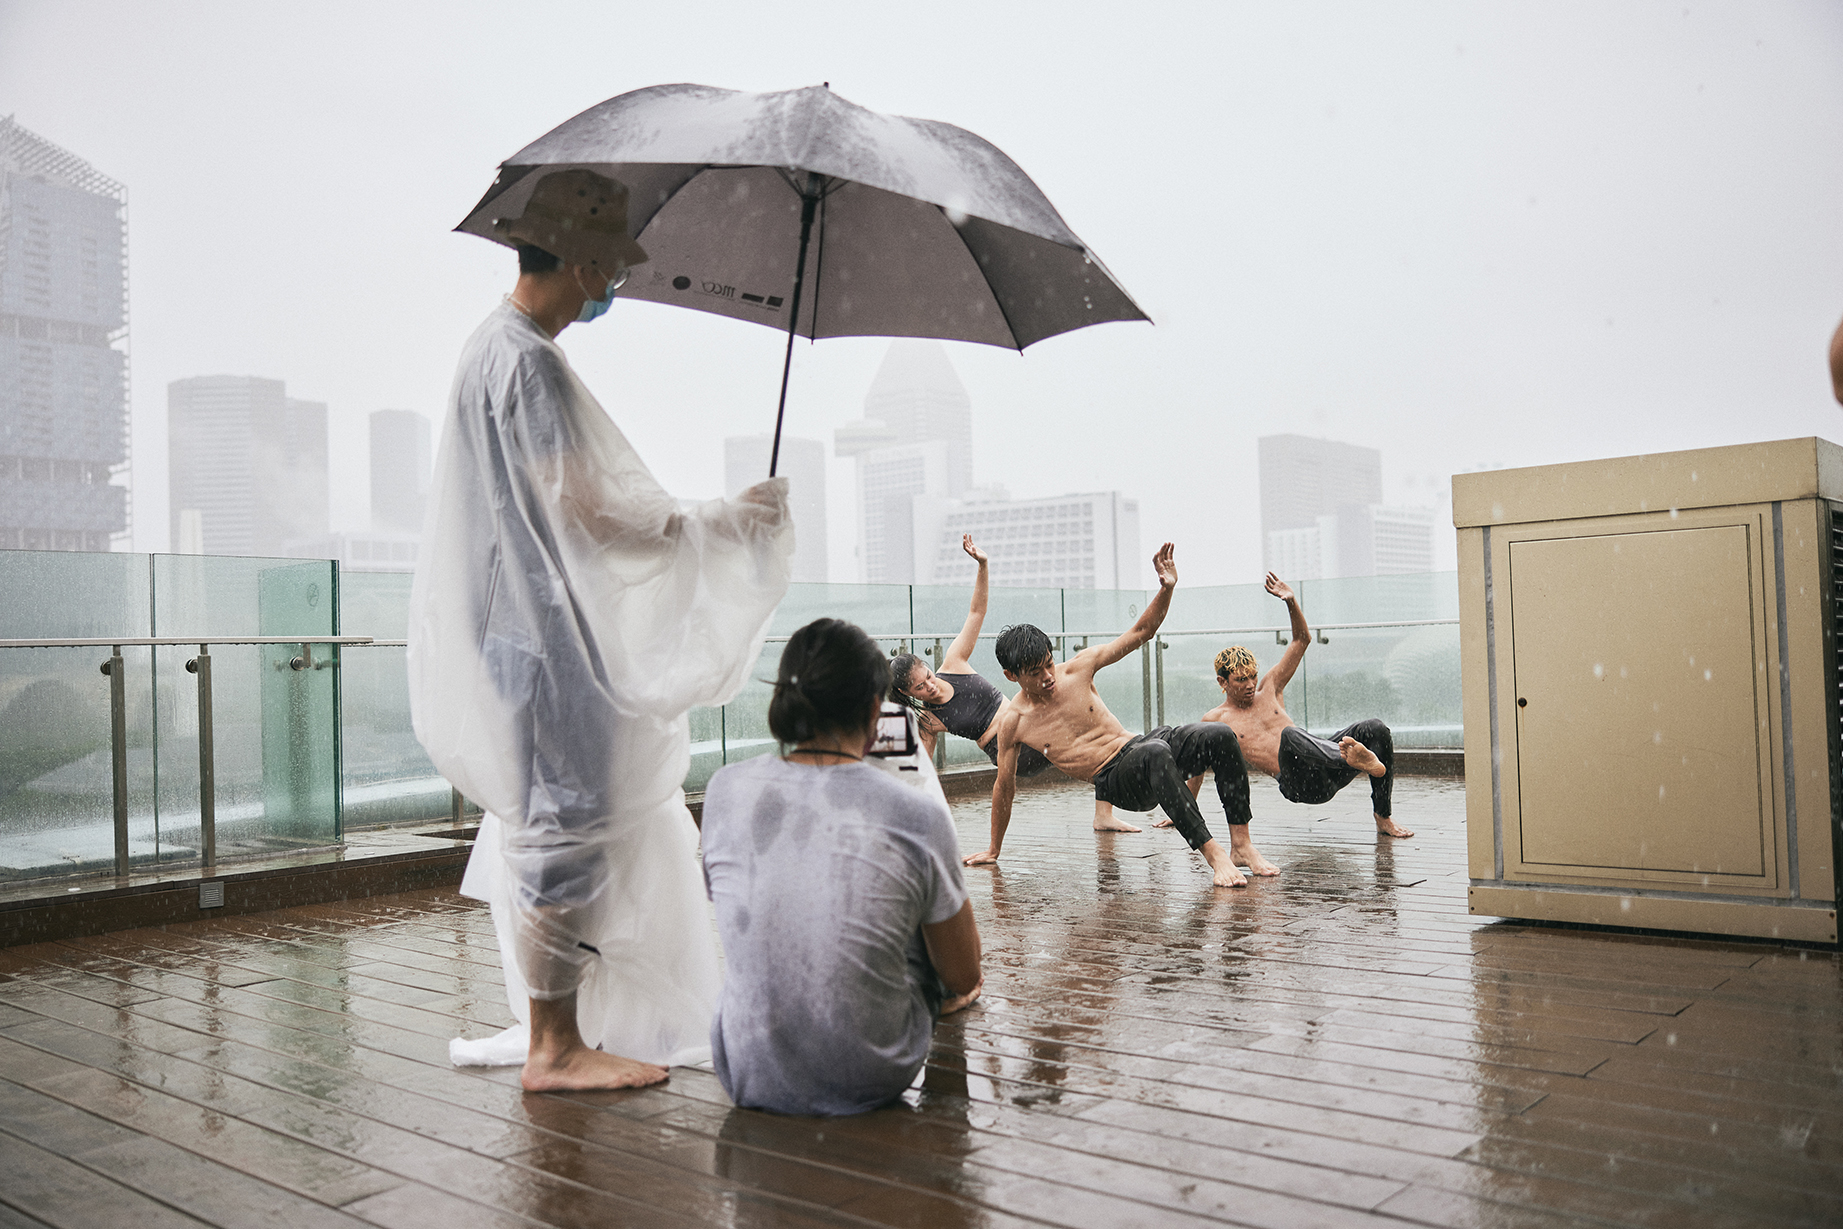 Choreographer Yarra Ileto monitors the filming, clad in a raincoat under an umbrella.